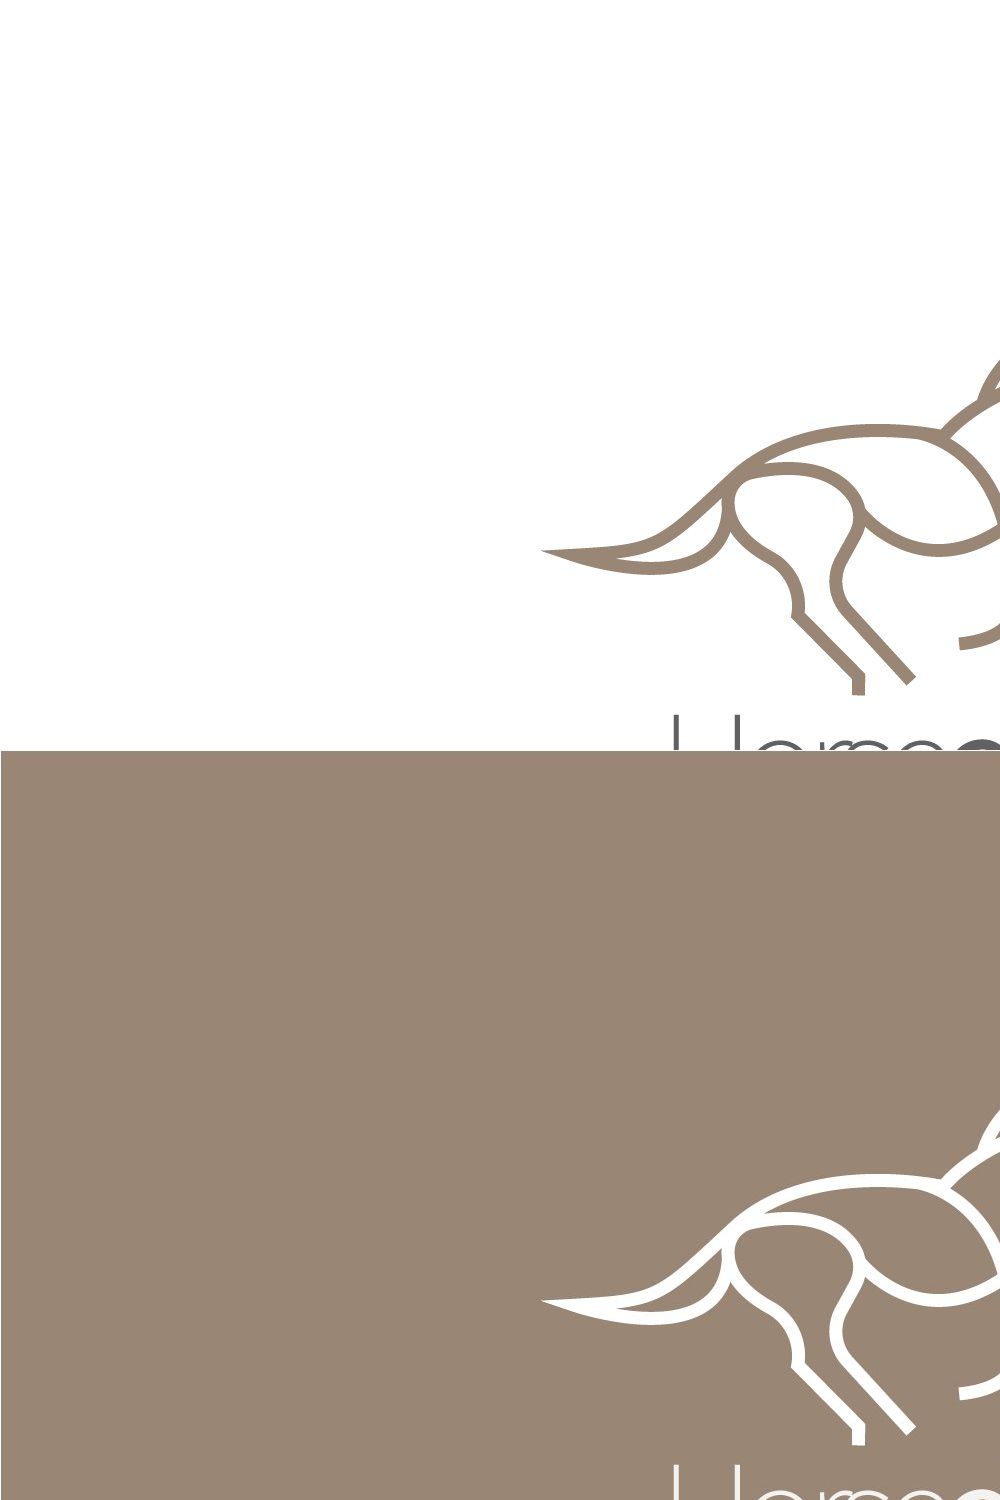 Horse club logo pinterest preview image.